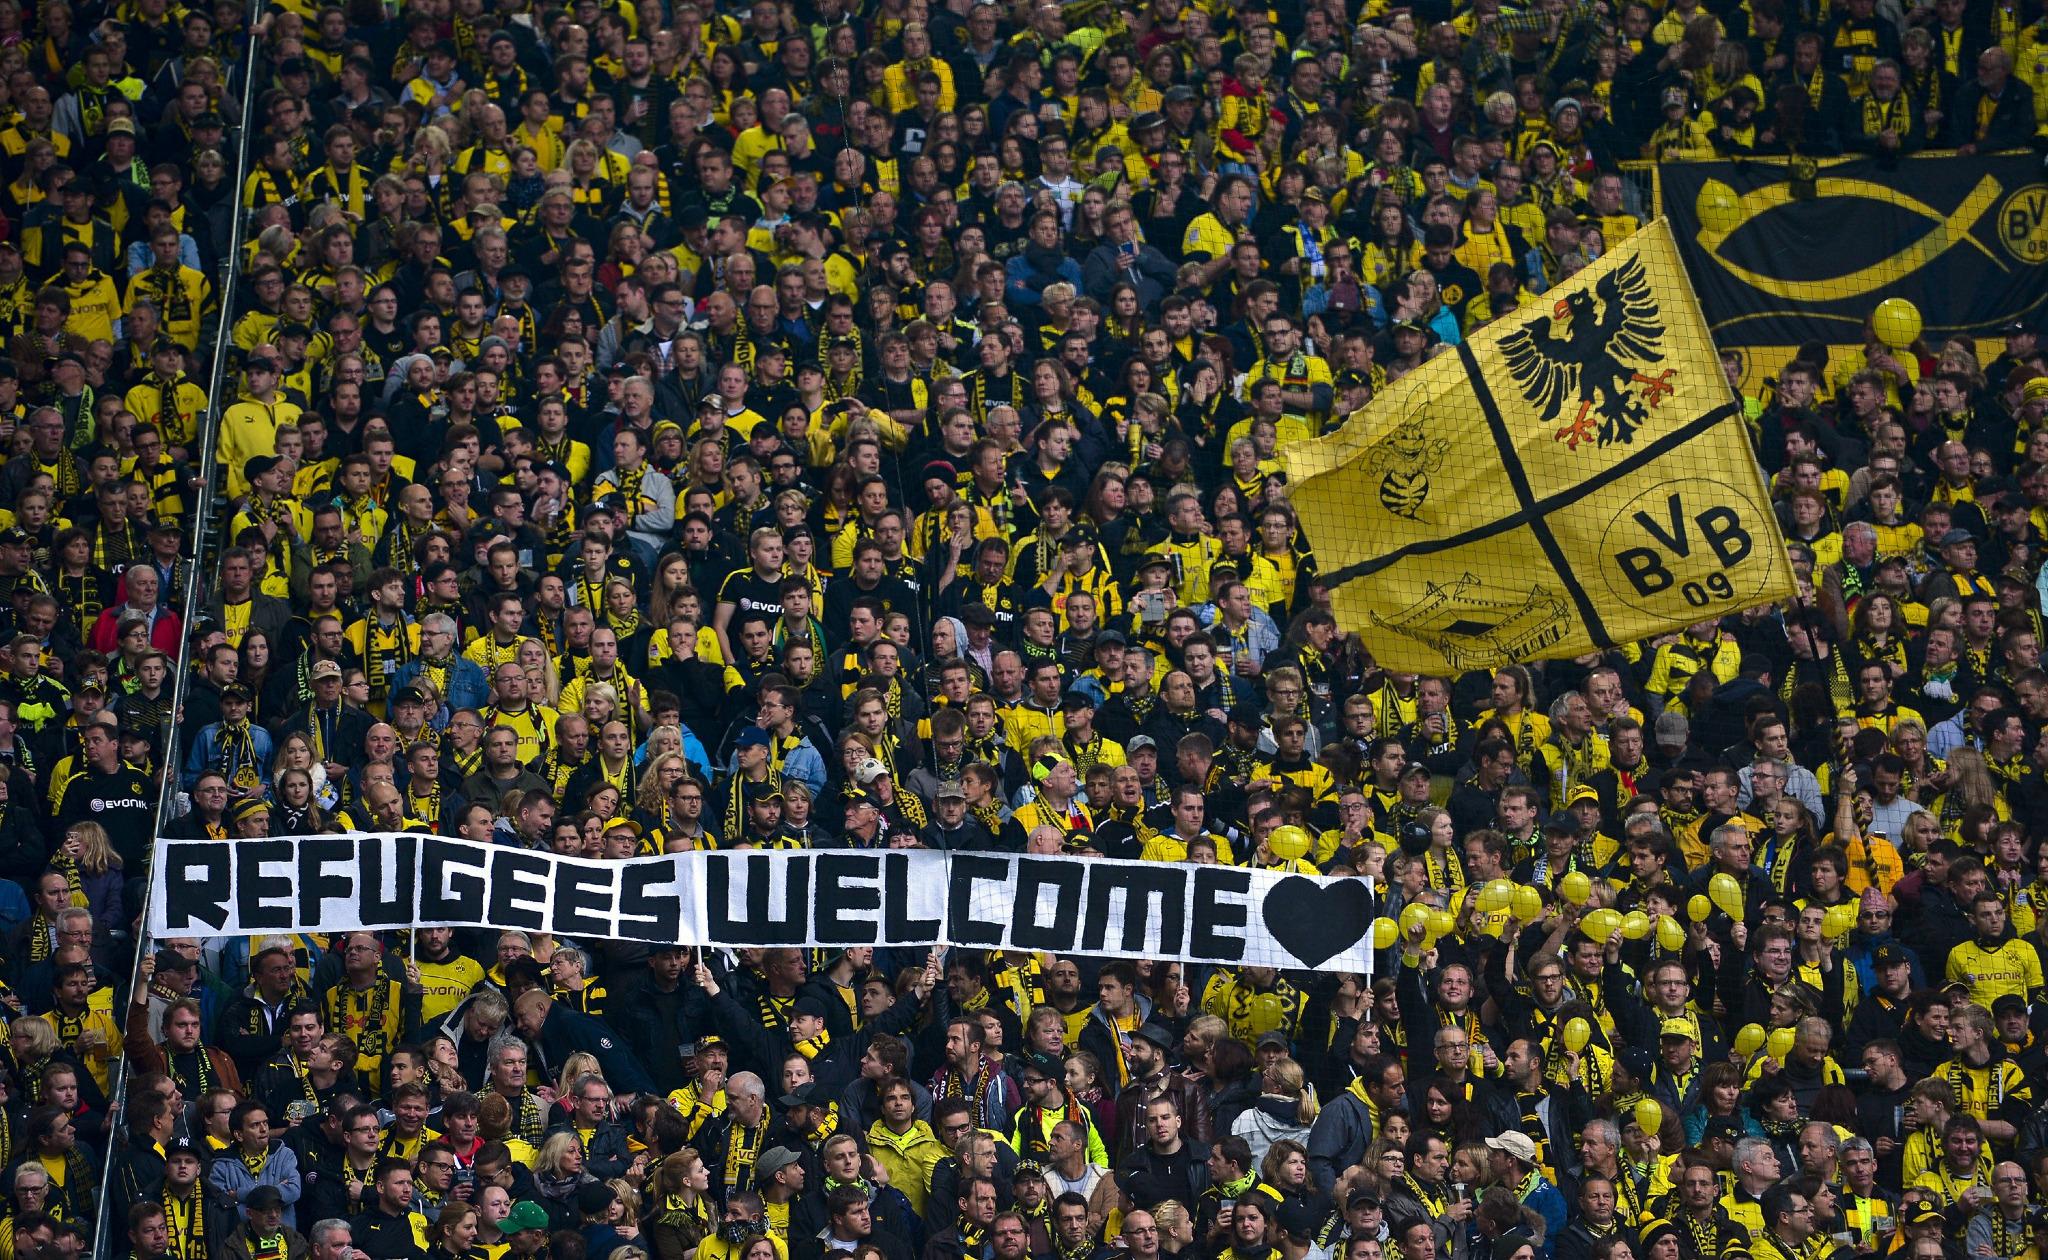 fornærme Begrænsning komme ud for UNHCR, the UN Refugee Agency on Twitter: "Borussia Dortmund football fans  praised for anti-discrimination banners - @EurosportCom_EN  https://t.co/oODdvjIsG1 http://t.co/D7TbJRlJCn" / Twitter